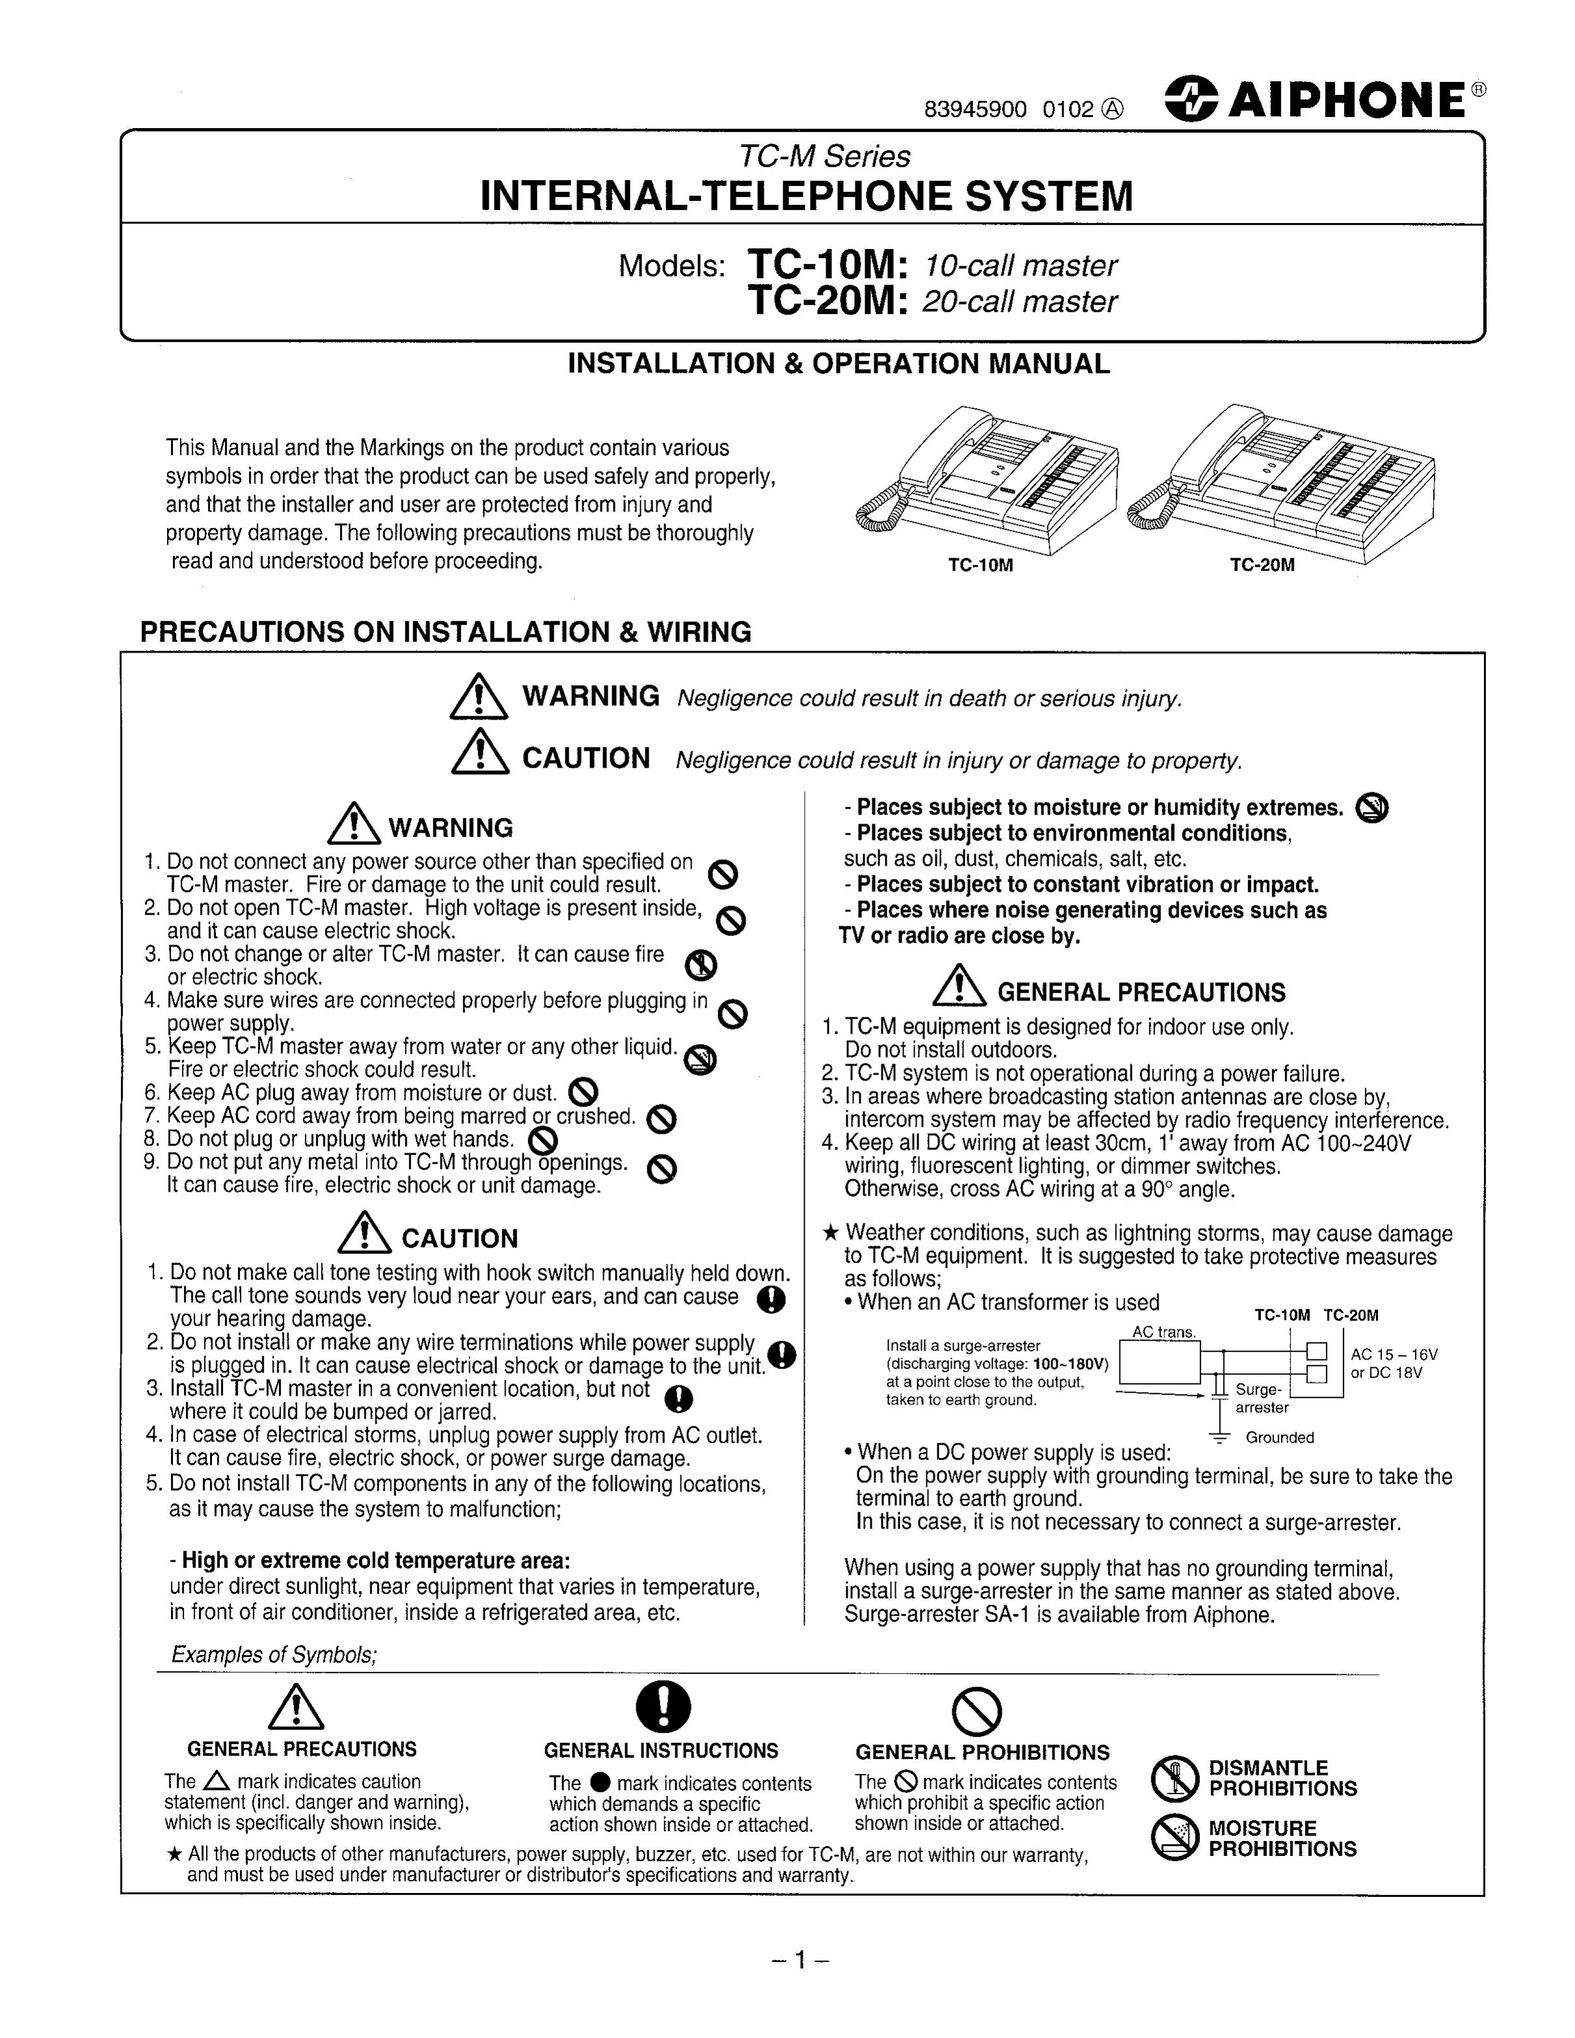 Aiphone TC-10M Cordless Telephone User Manual